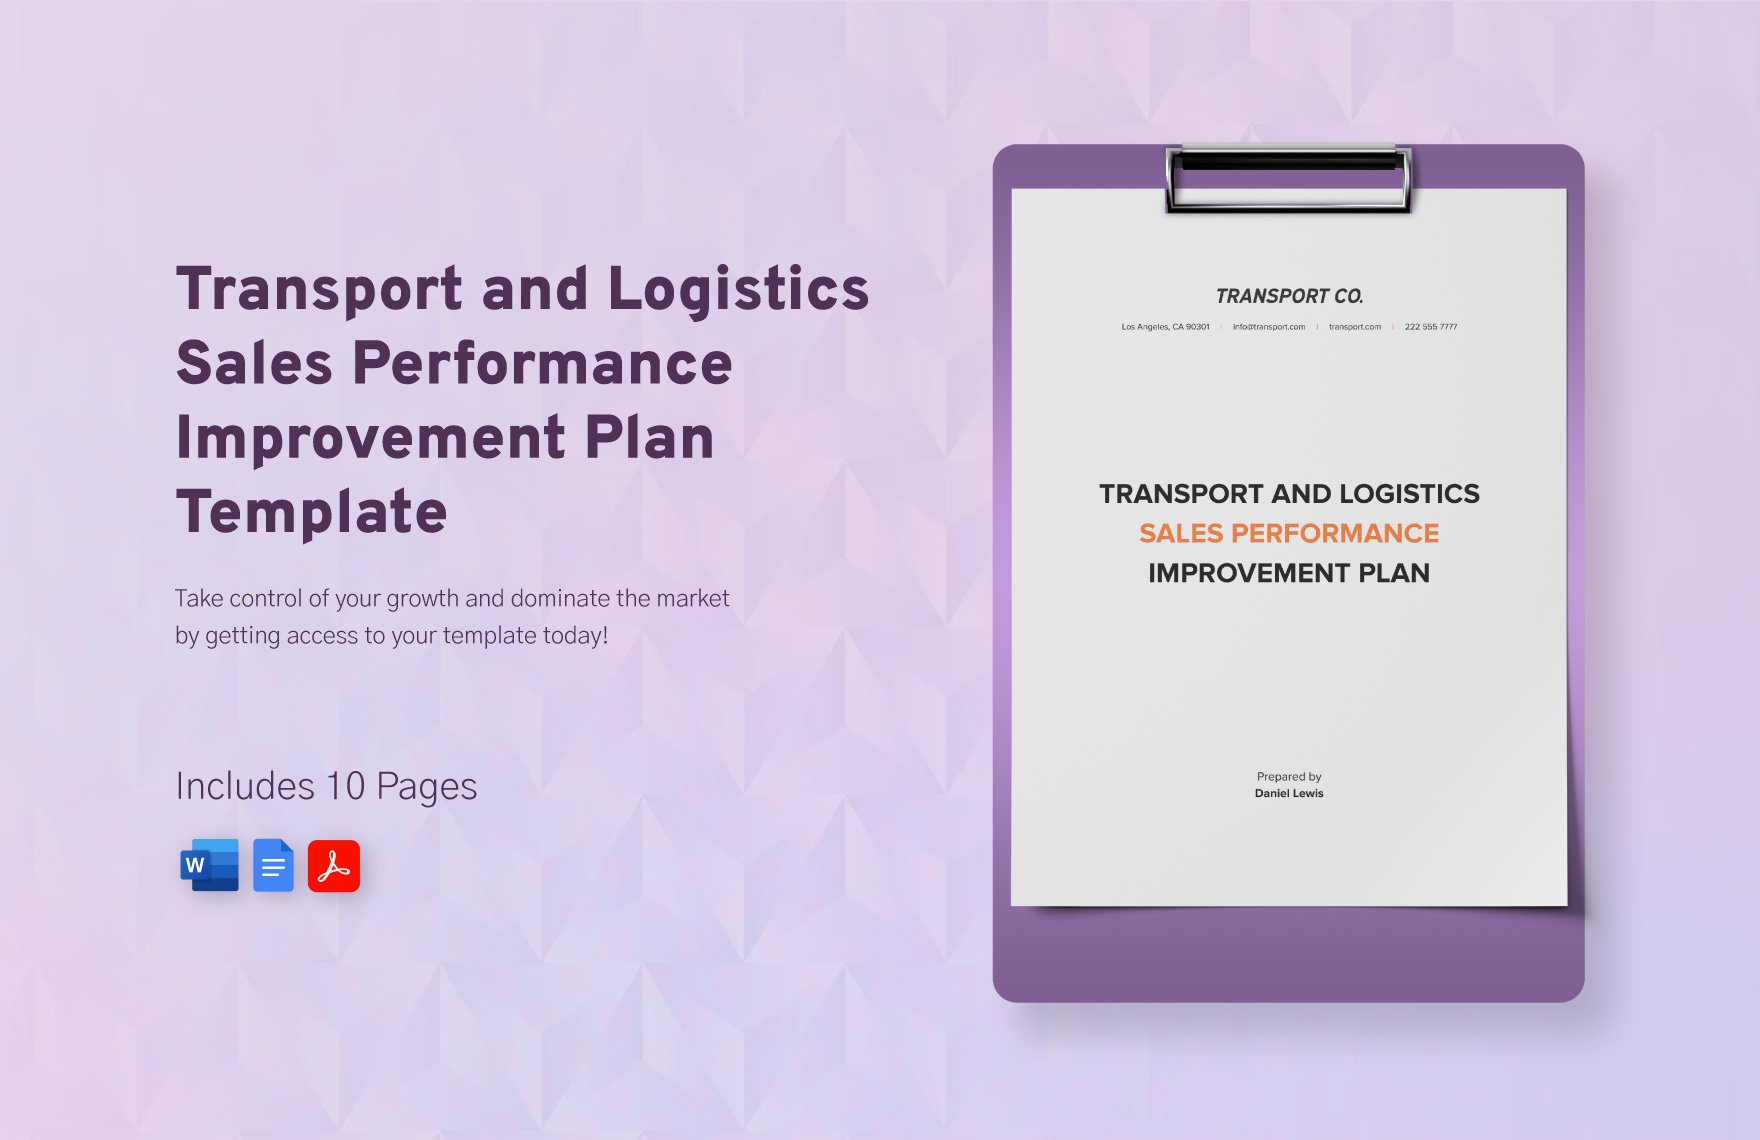 Transport and Logistics Sales Performance Improvement Plan Template